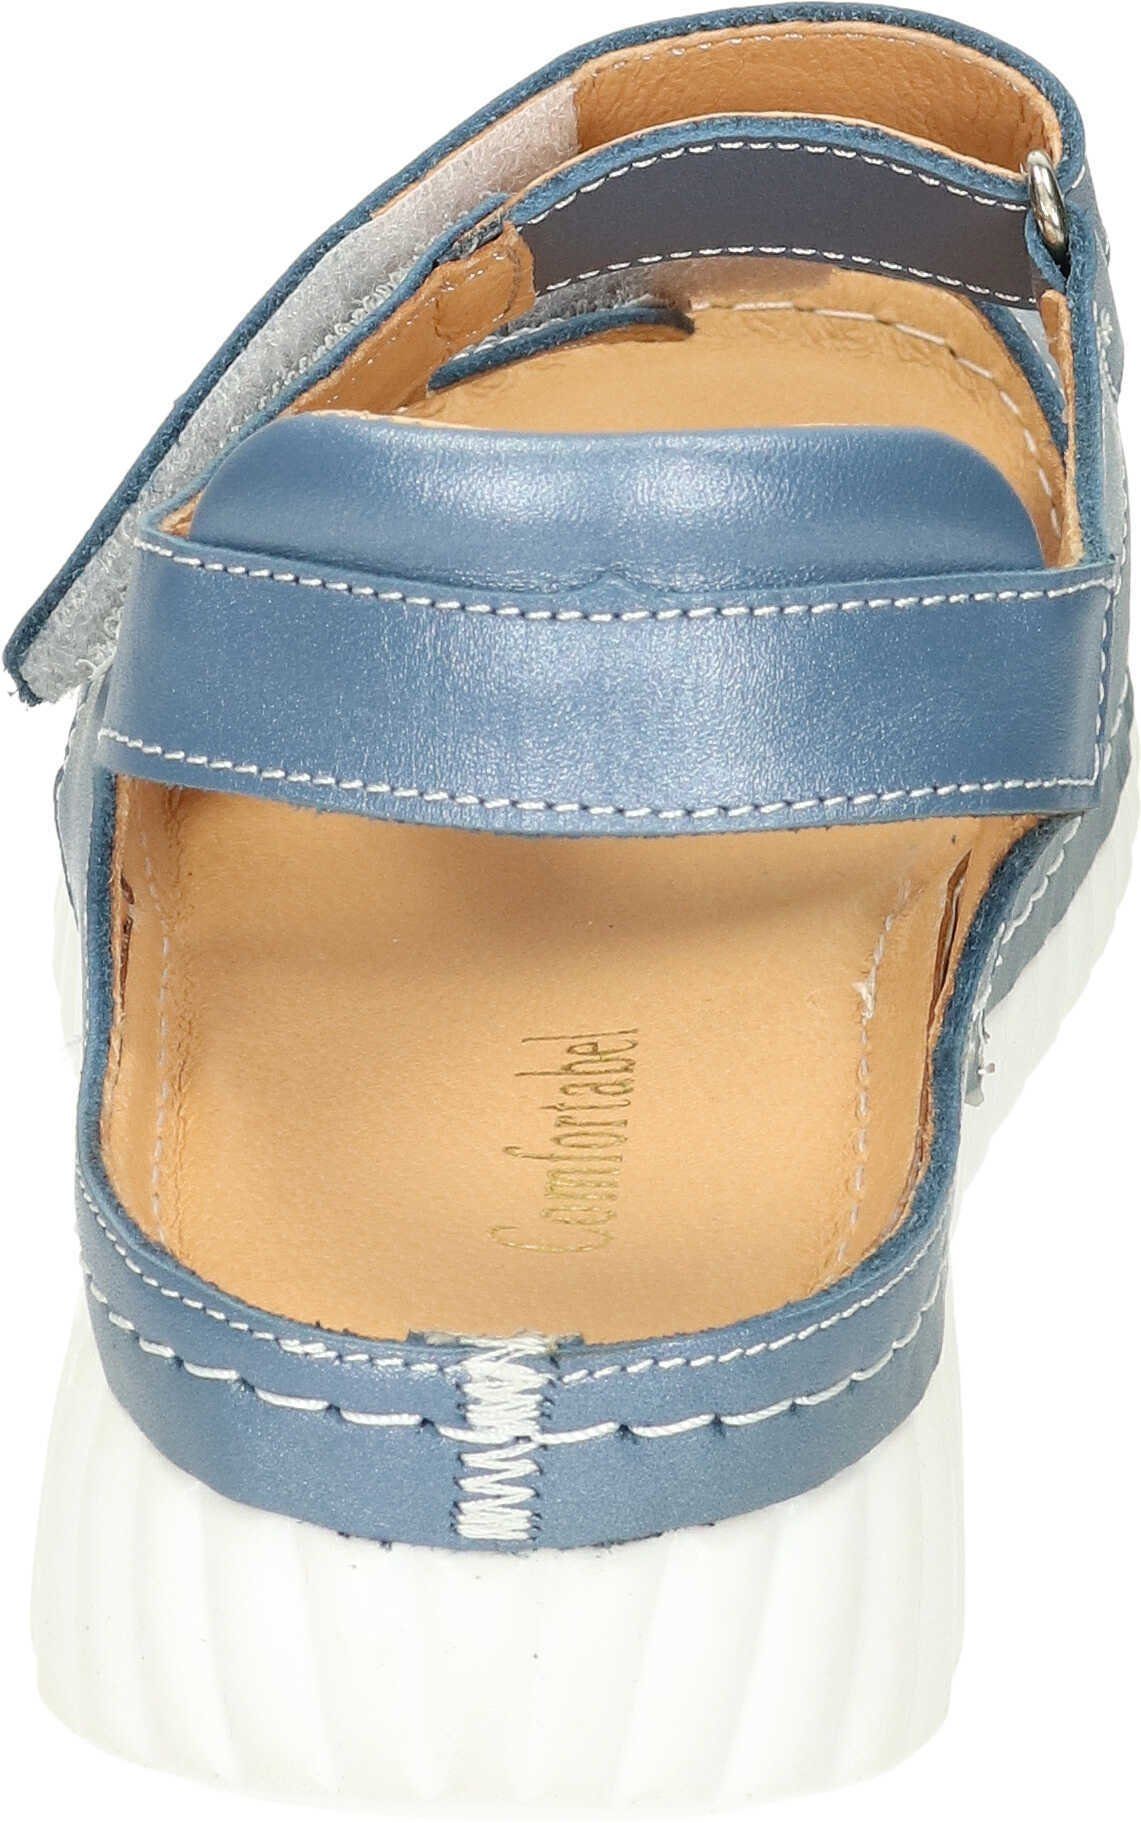 Sandaletten Leder echtem aus Sandalette blau Comfortabel